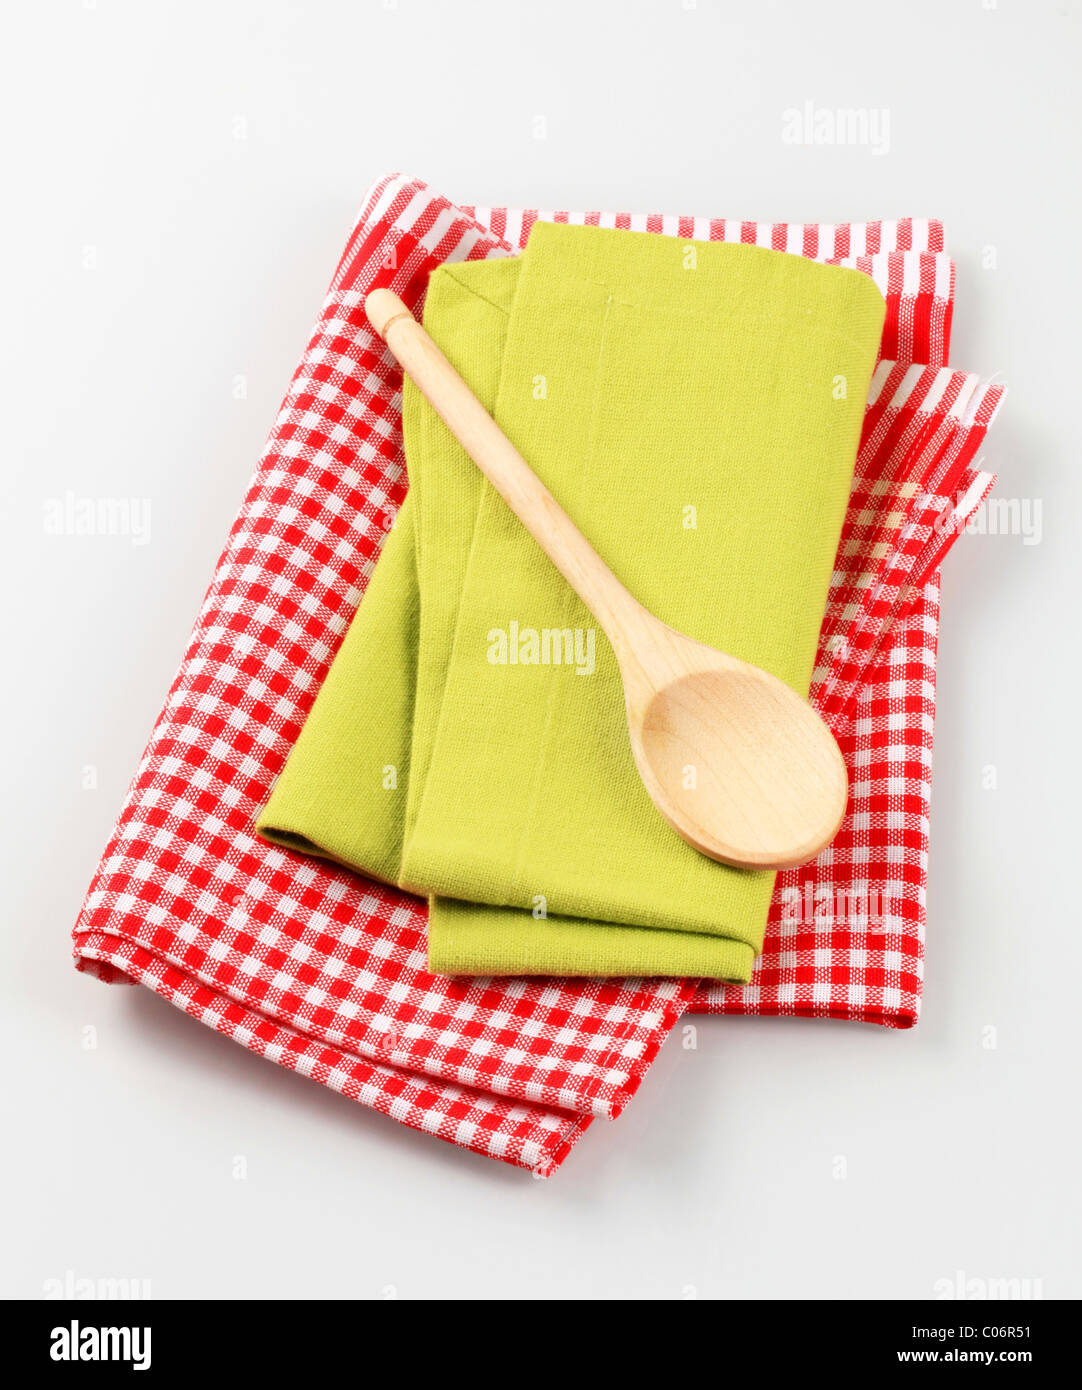 https://c8.alamy.com/comp/C06R51/wooden-spoon-and-tea-towels-C06R51.jpg